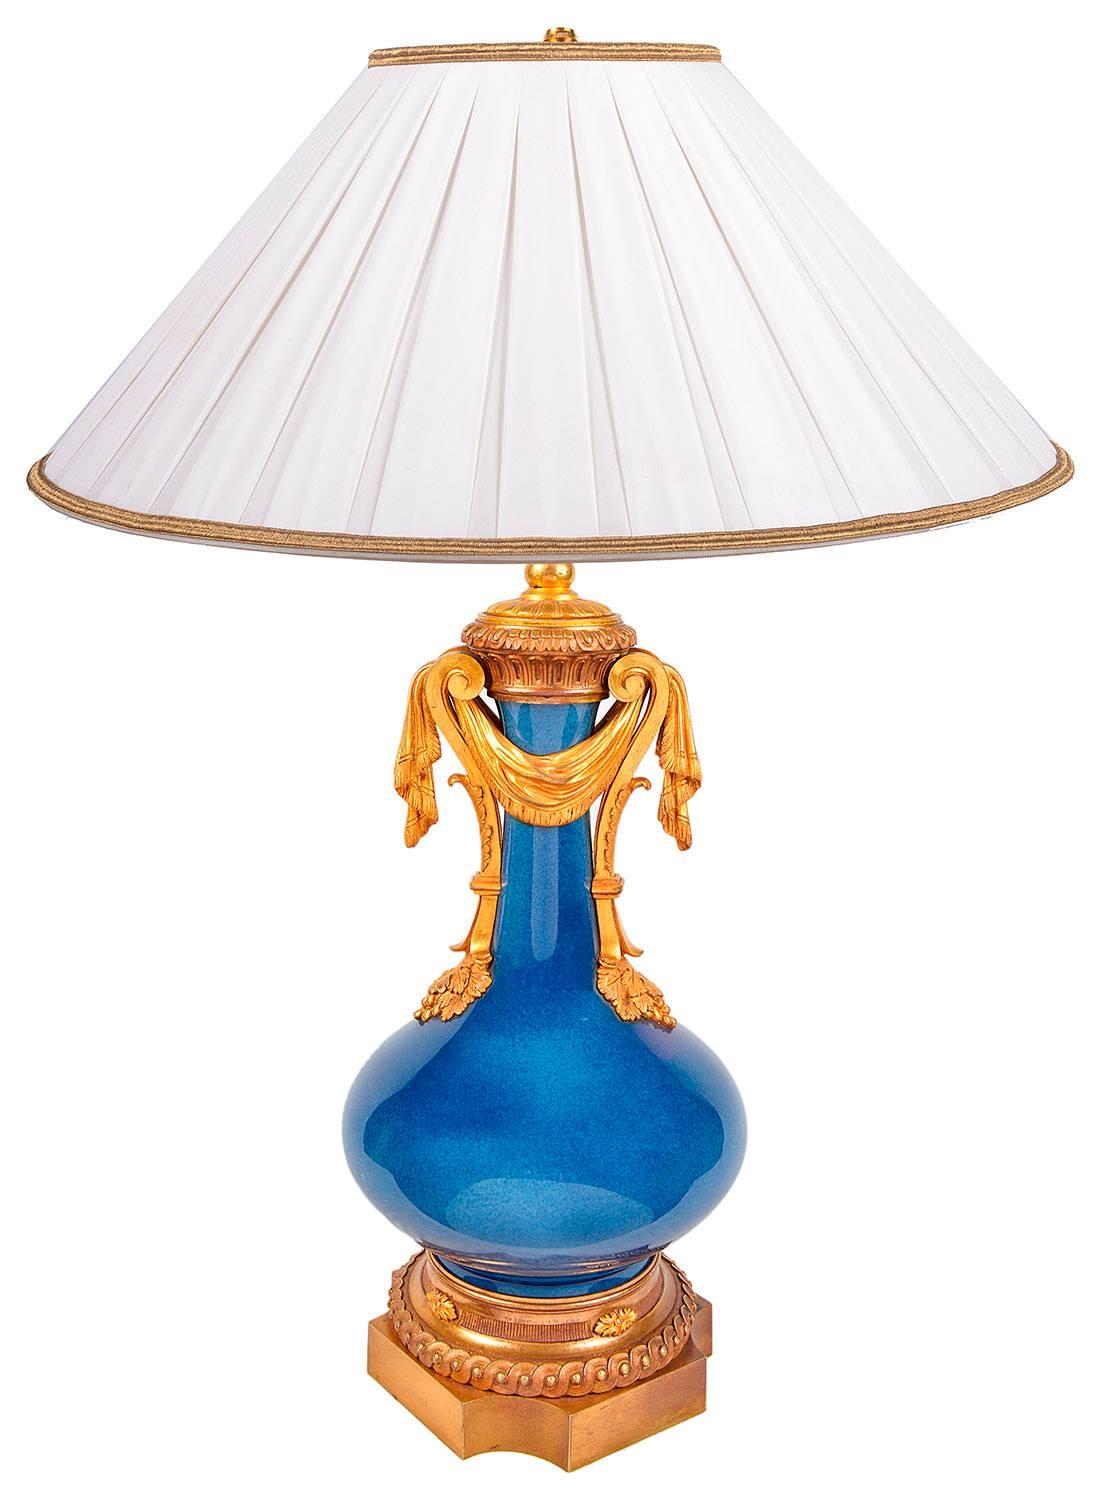 19th Century Chinese Powder Blue Vase or Lamp 1